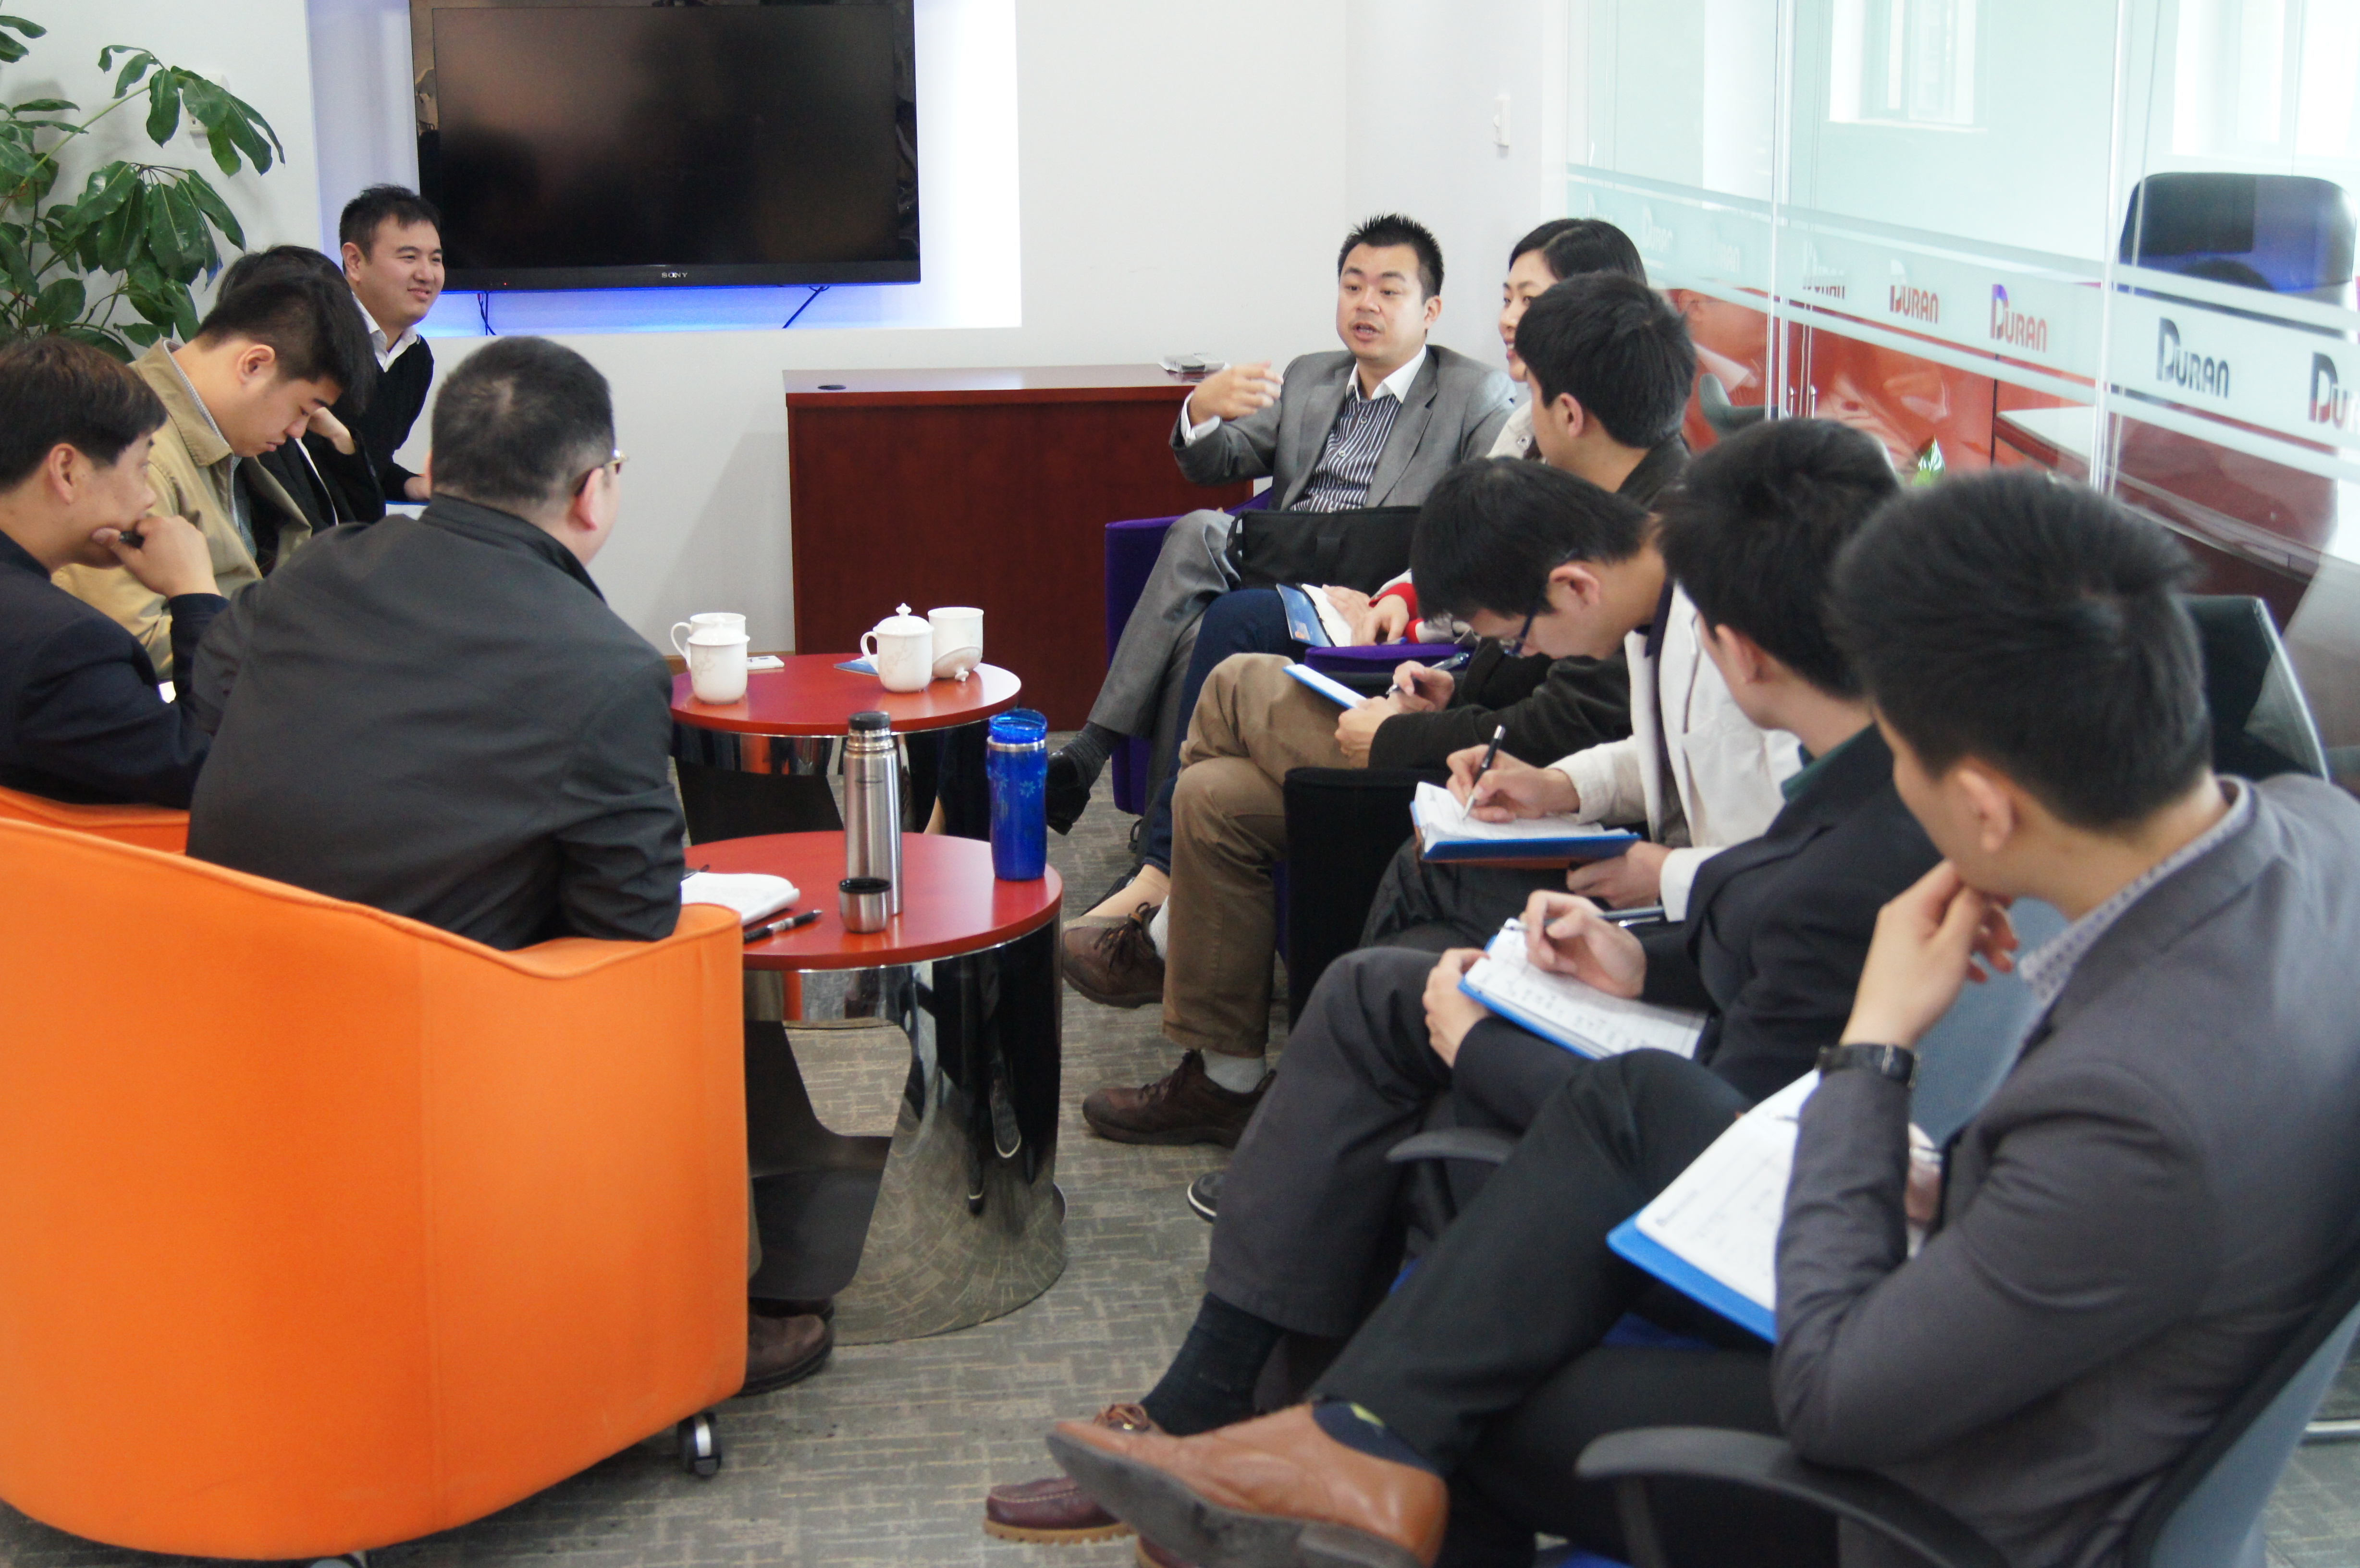 Duran德润小额贷款邀请中国银行中小企业团队来我司拜访并洽谈合作项目